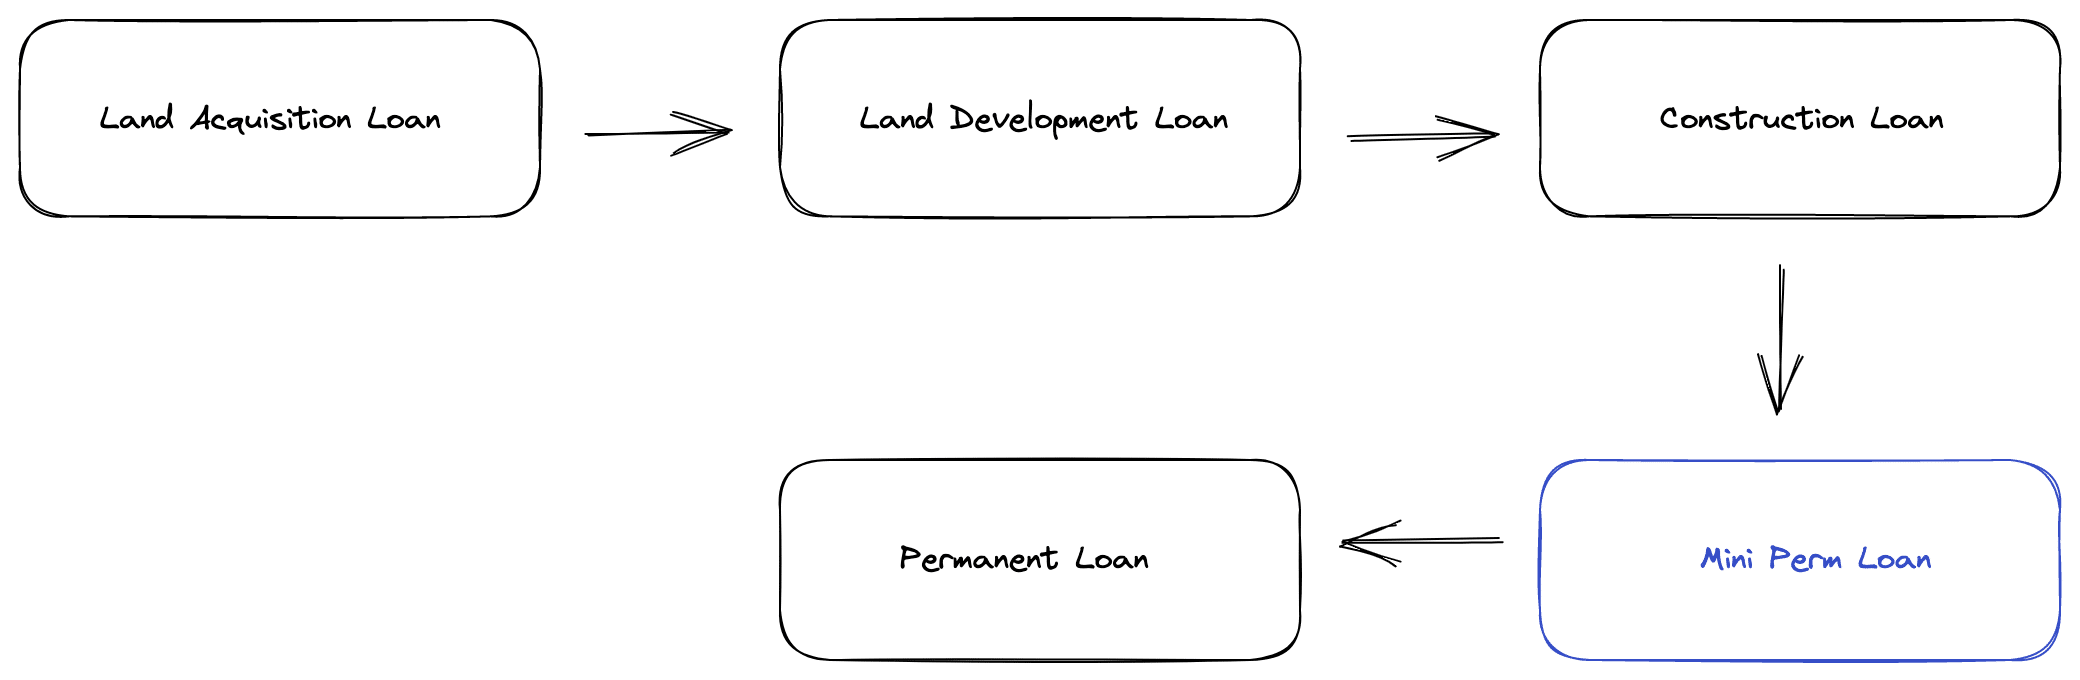 Mini perm loan